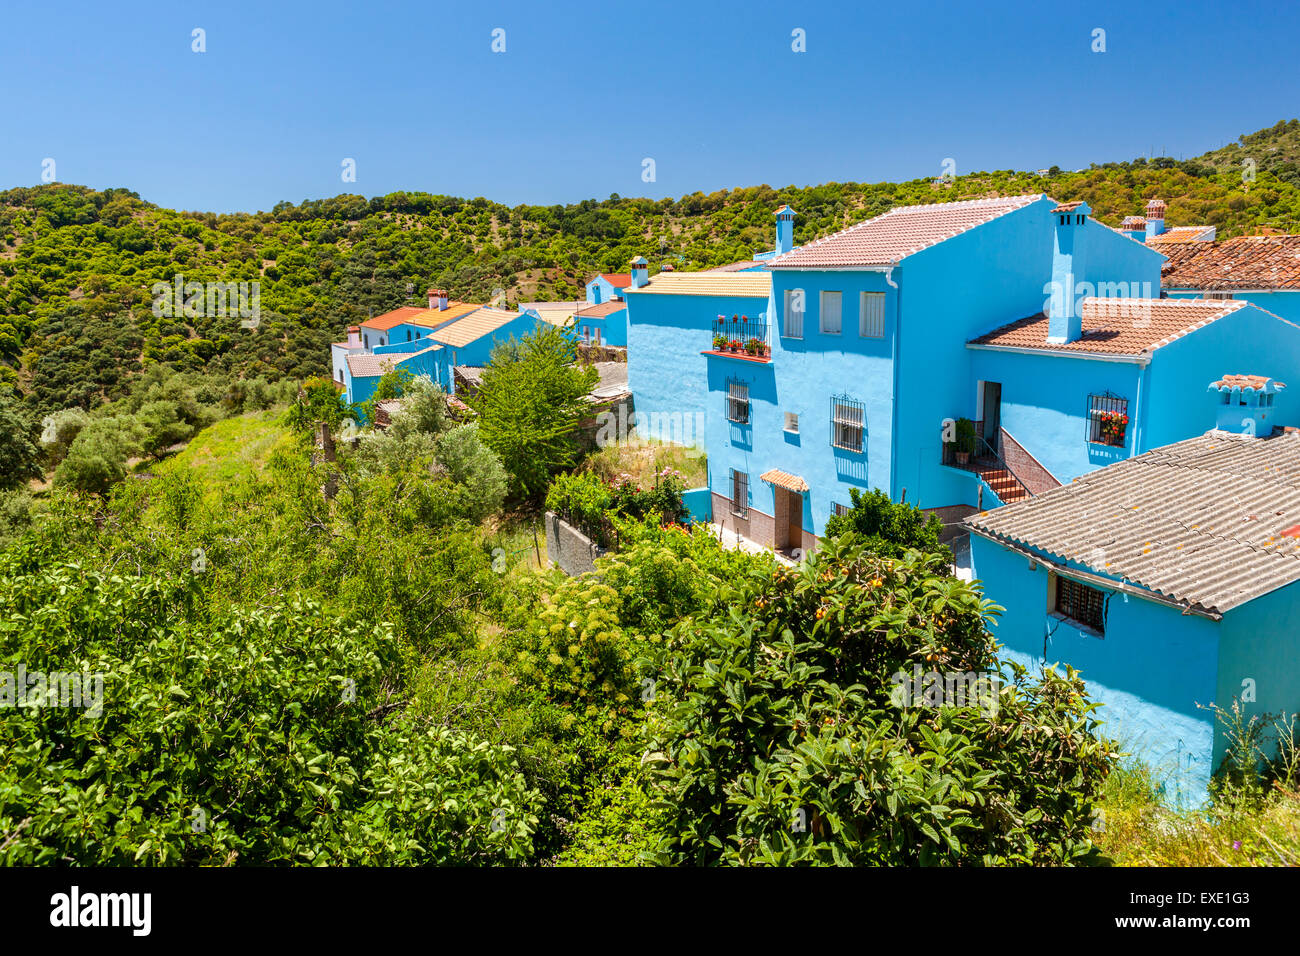 Pueblo Júzcar in Schlumpf blau, Serrania de Ronda, Malaga Provinz, Andalusien, Spanien, Europa. Stockfoto